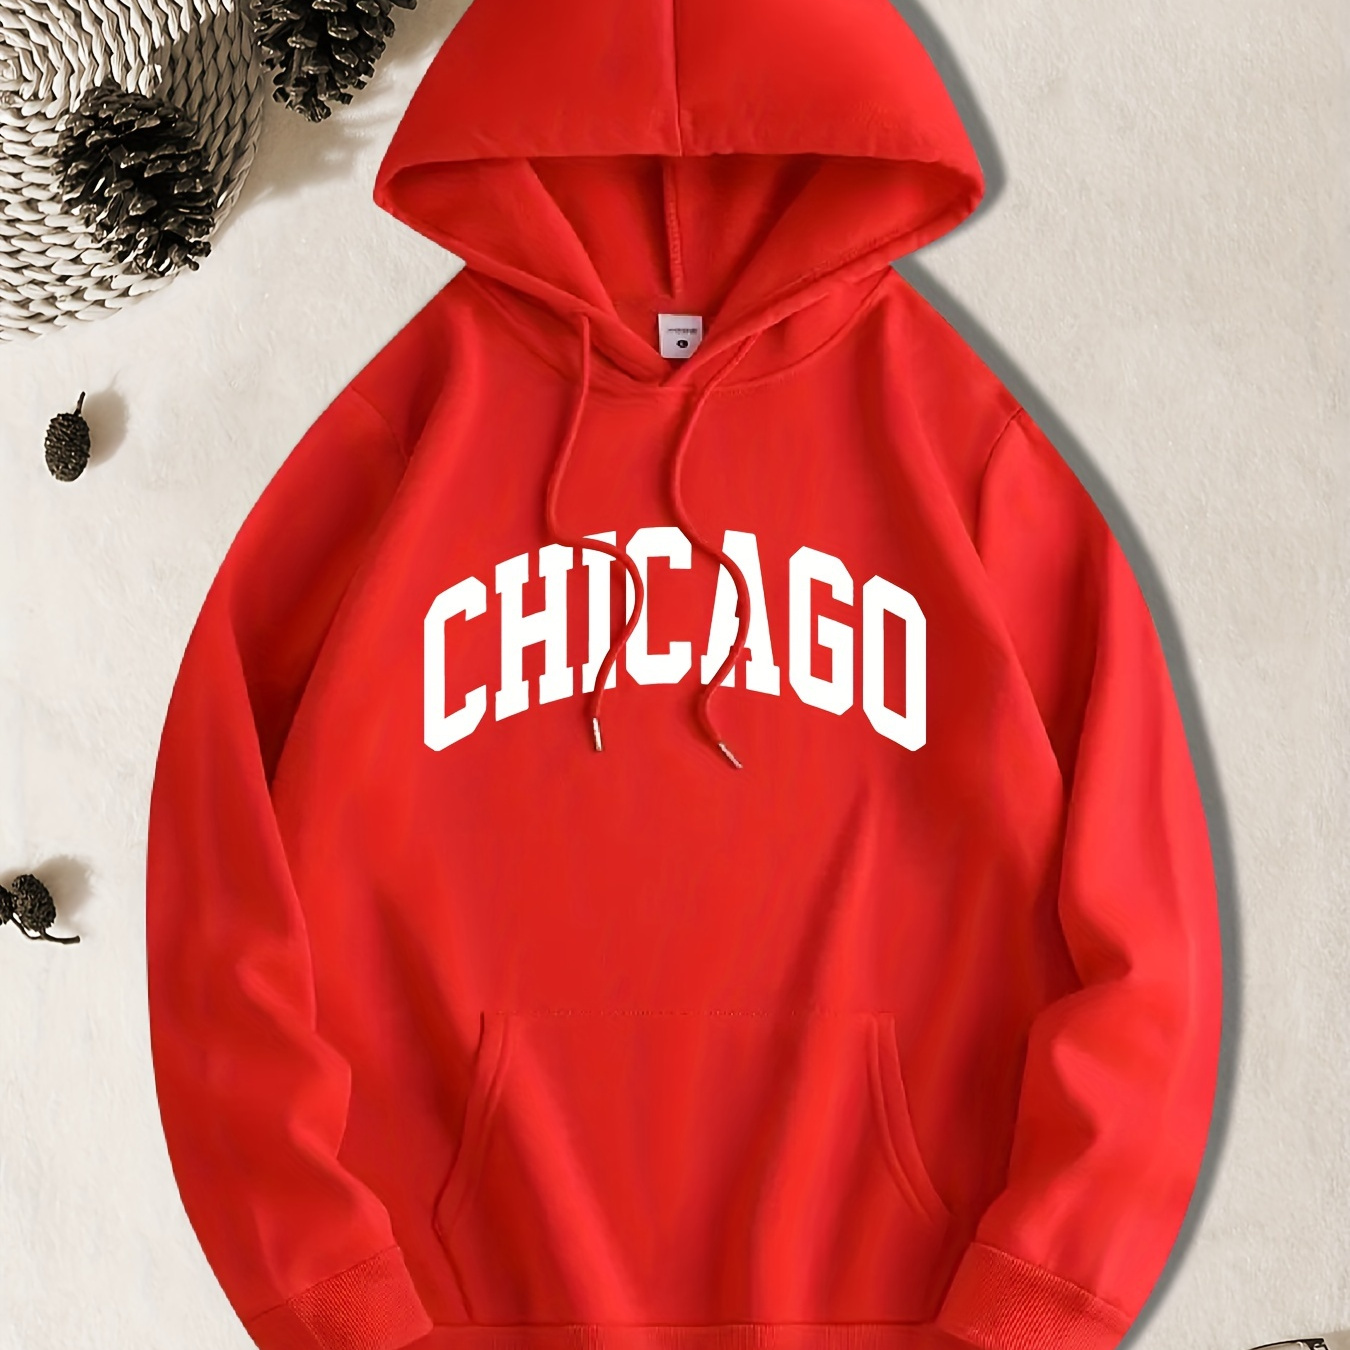 

Chicago Letter Print Men's Long Sleeve Hoodie, Drawstring Hooded Sweatshirt With Kangaroo Pocket, Casual Comfortable Versatile Top For Autumn & Winter